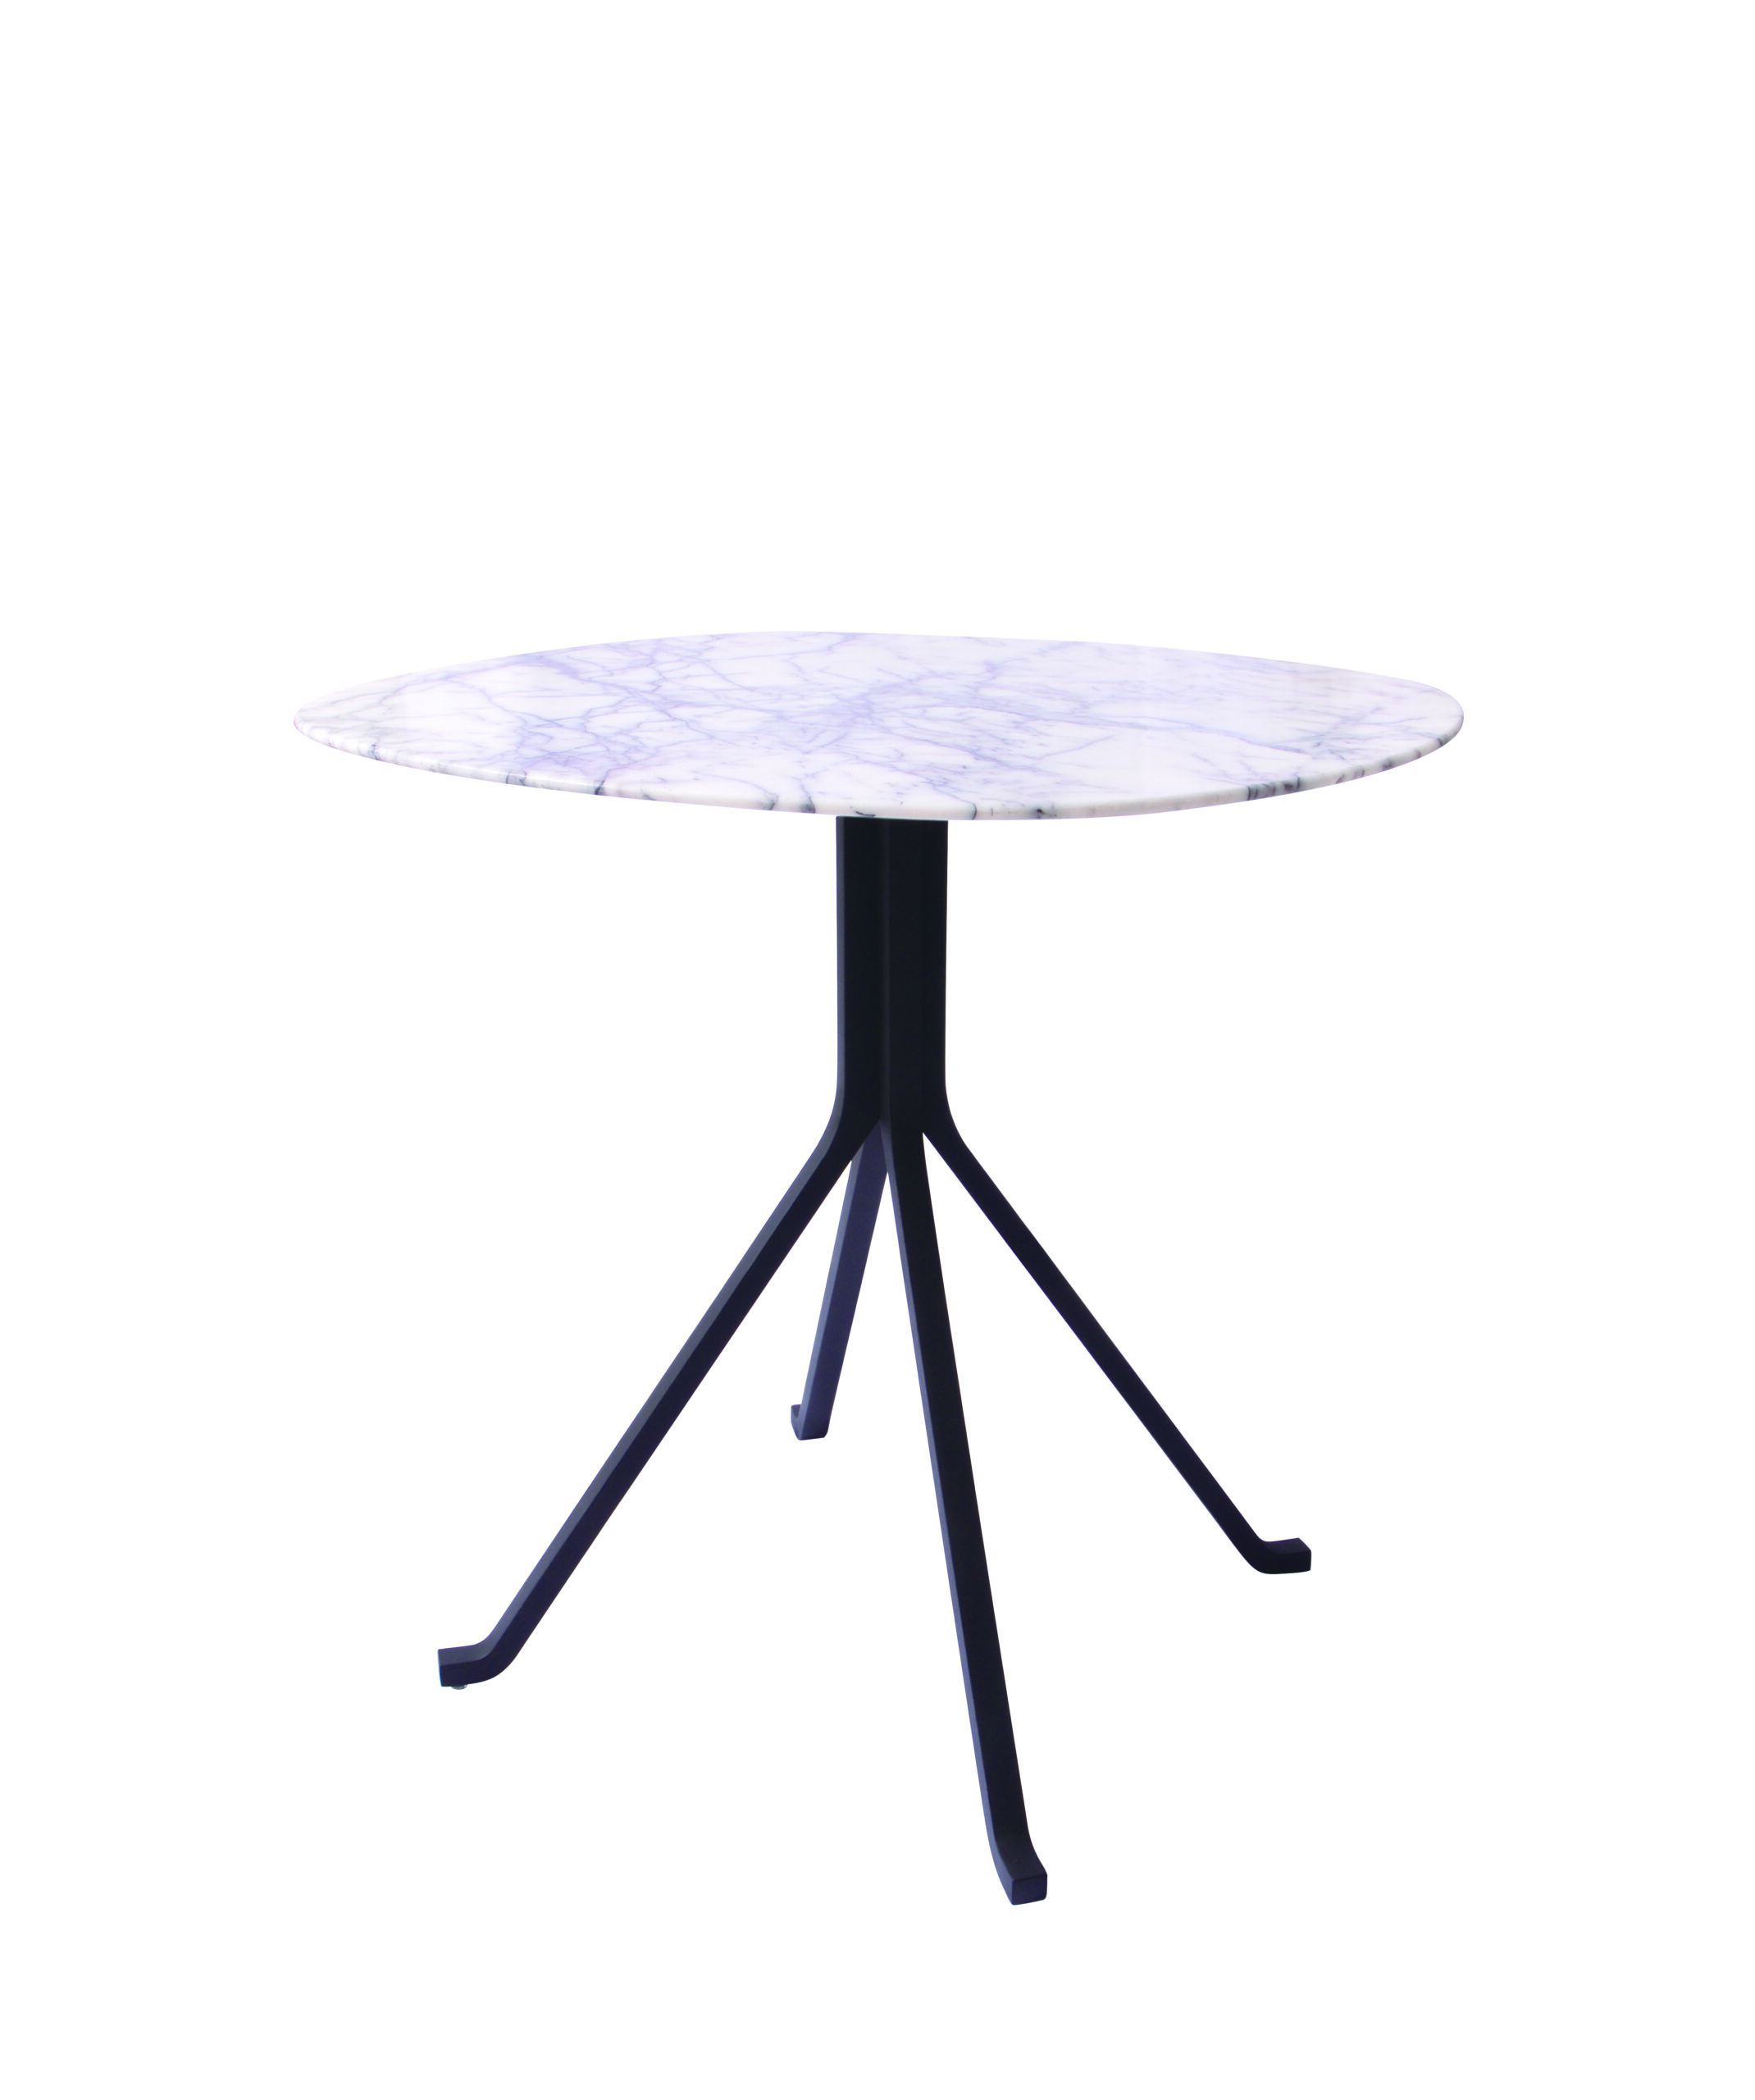 Blink Café Table – Stone Top